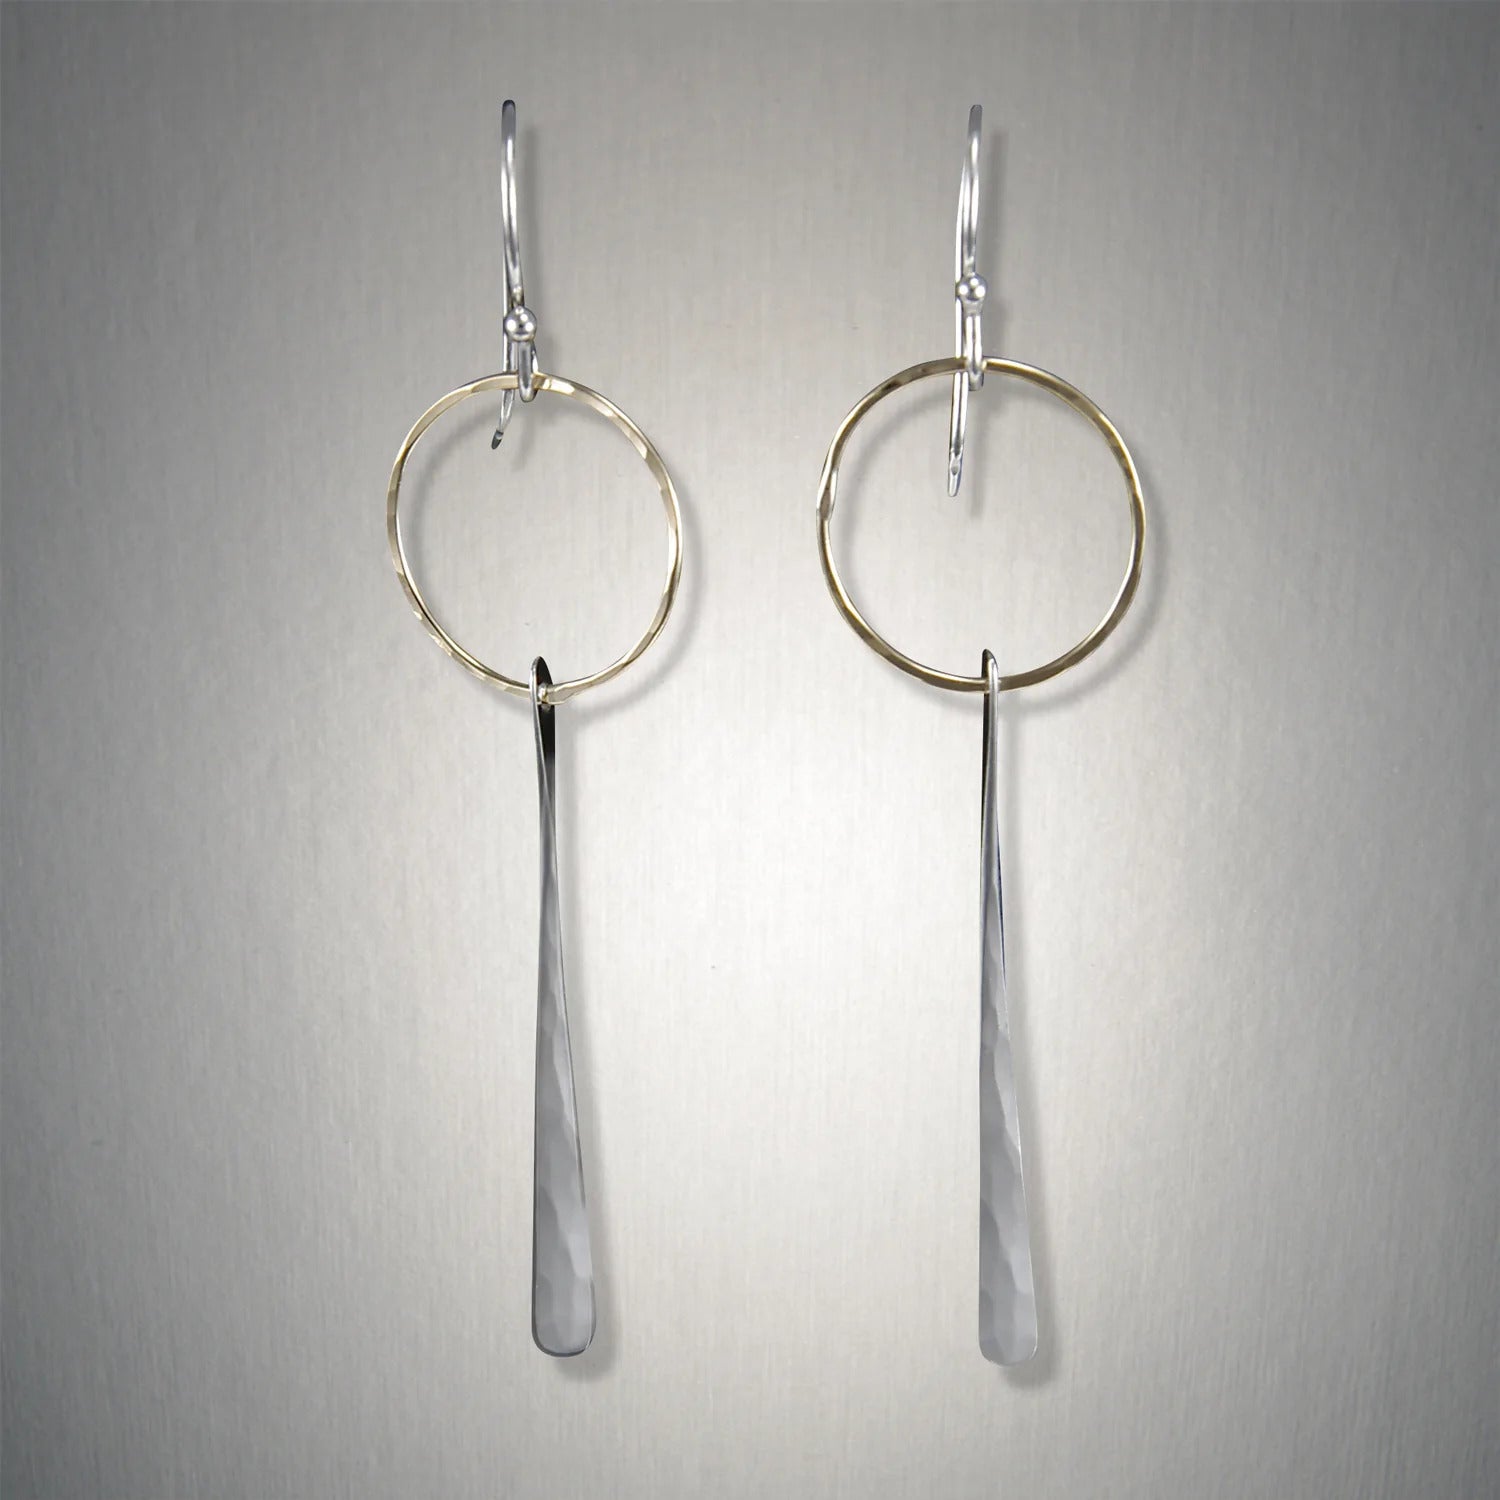 Peter James Dangling Small Pendulum Earrings? Jewelry? Buy Art at Carolina Creations Gallery in Downtown New Bern?